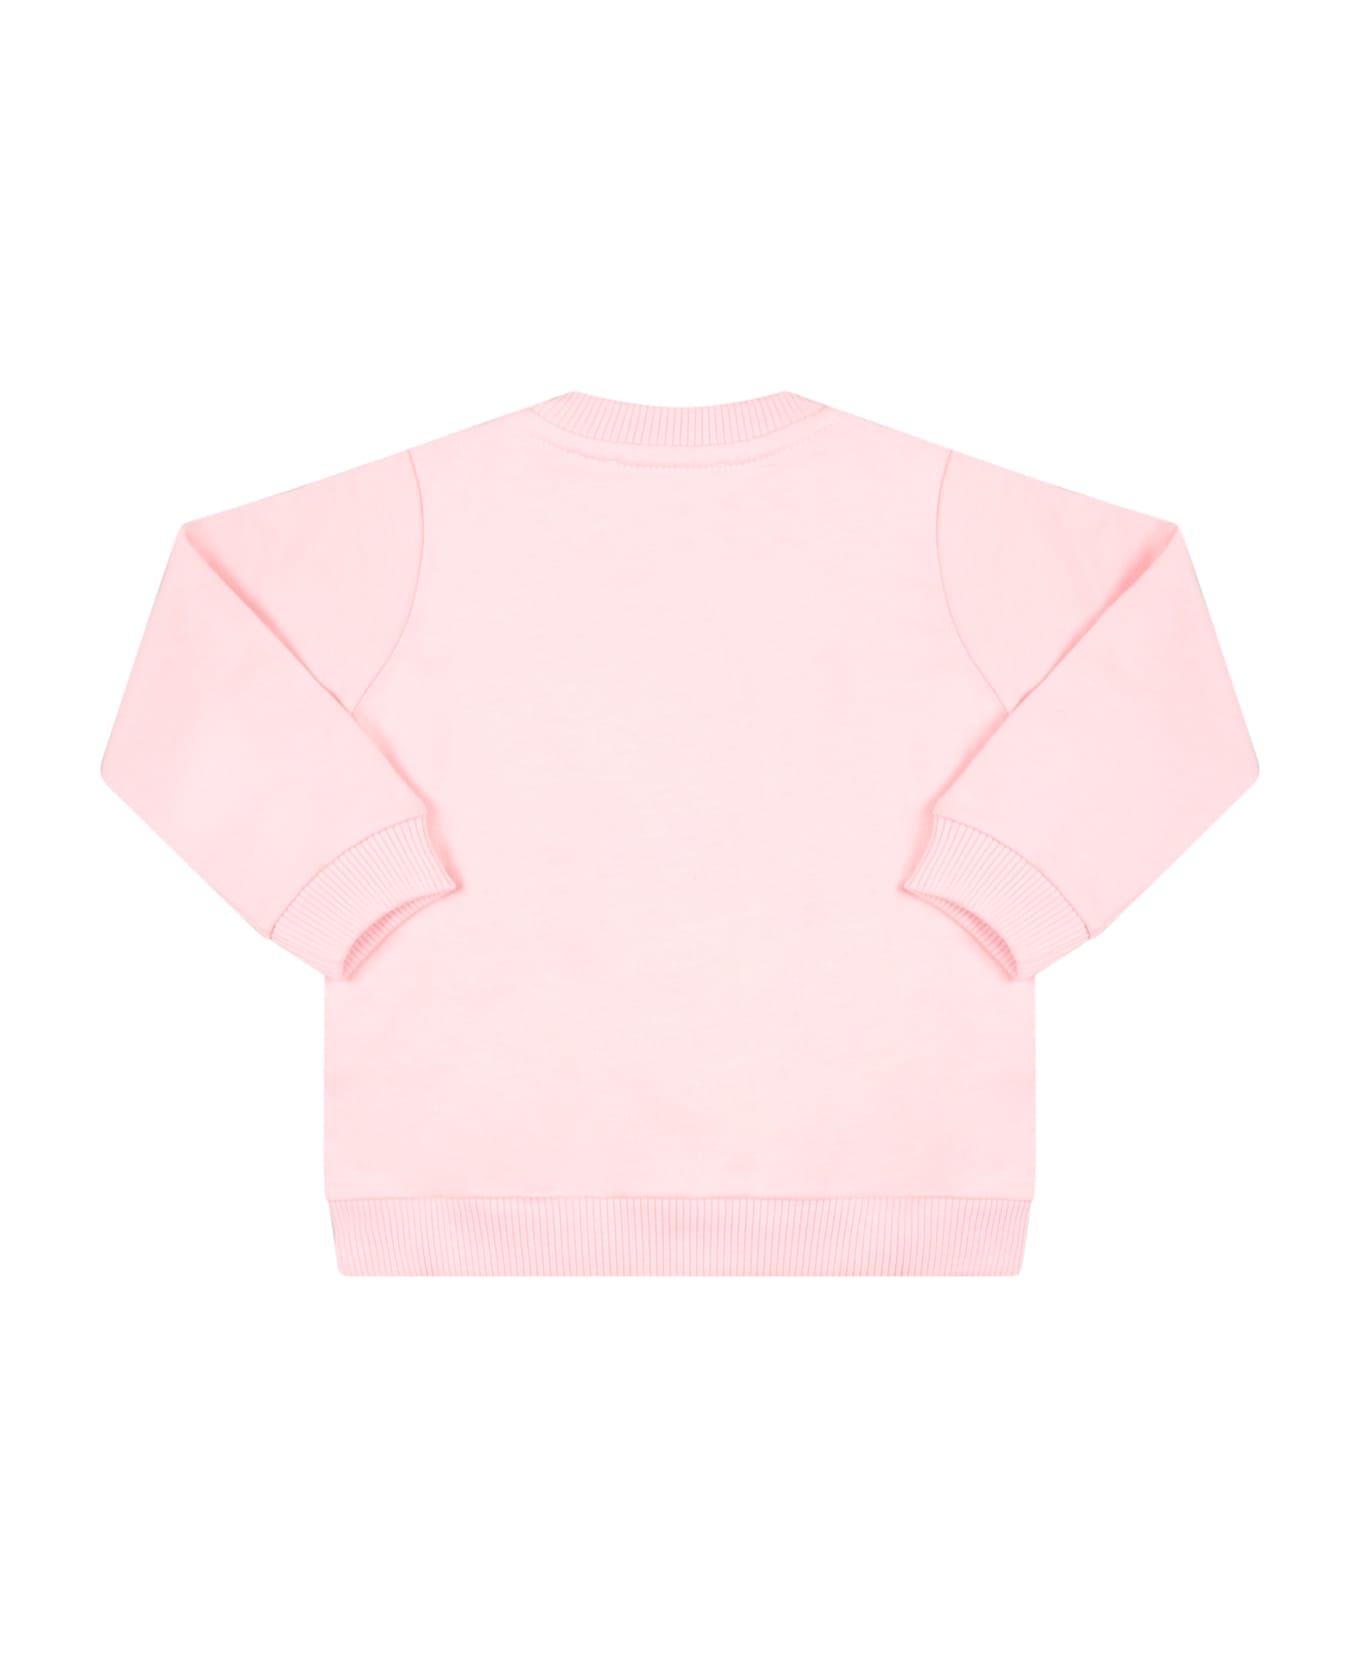 Moschino Pink Sweatshirt For Baby Girl With Teddy Bear - Pink